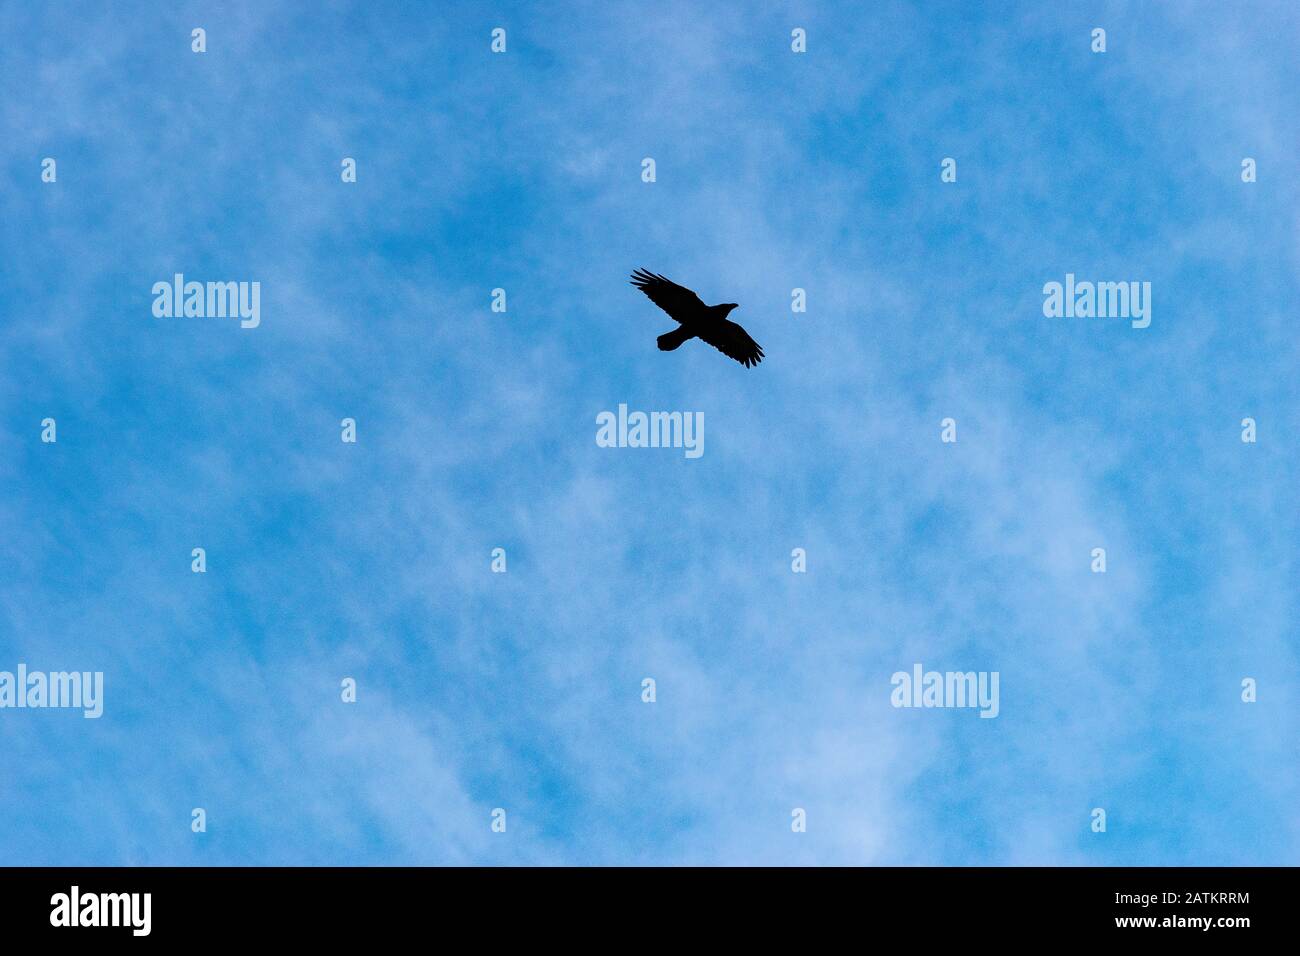 A wild predator bird flying in the sky Stock Photo